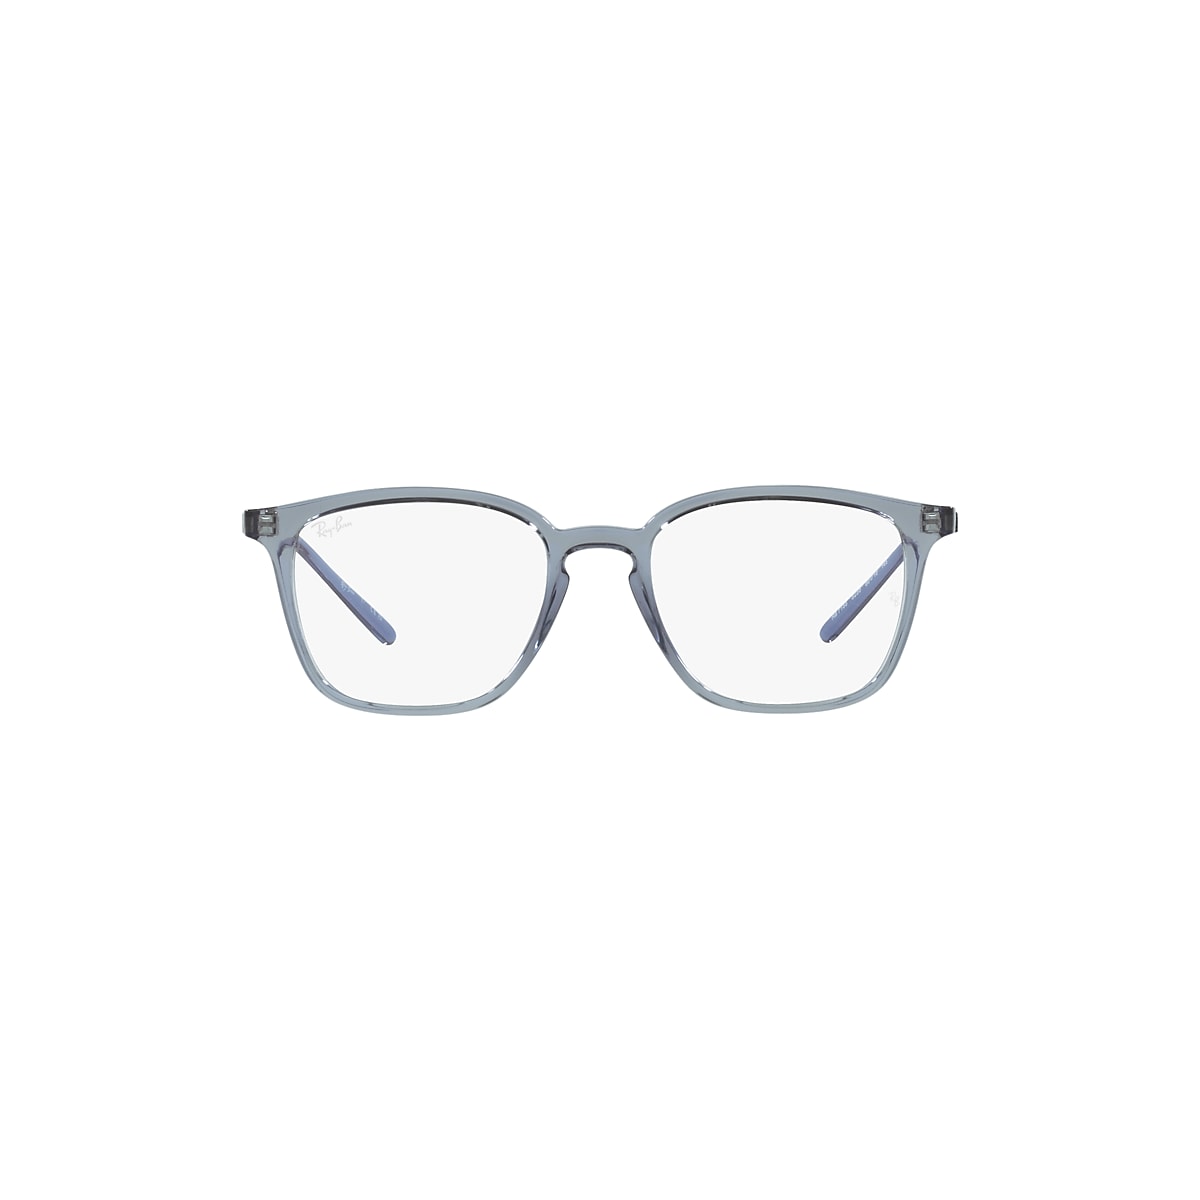 RB7185 OPTICS Eyeglasses with Transparent Dark Blue Frame - RB7185 